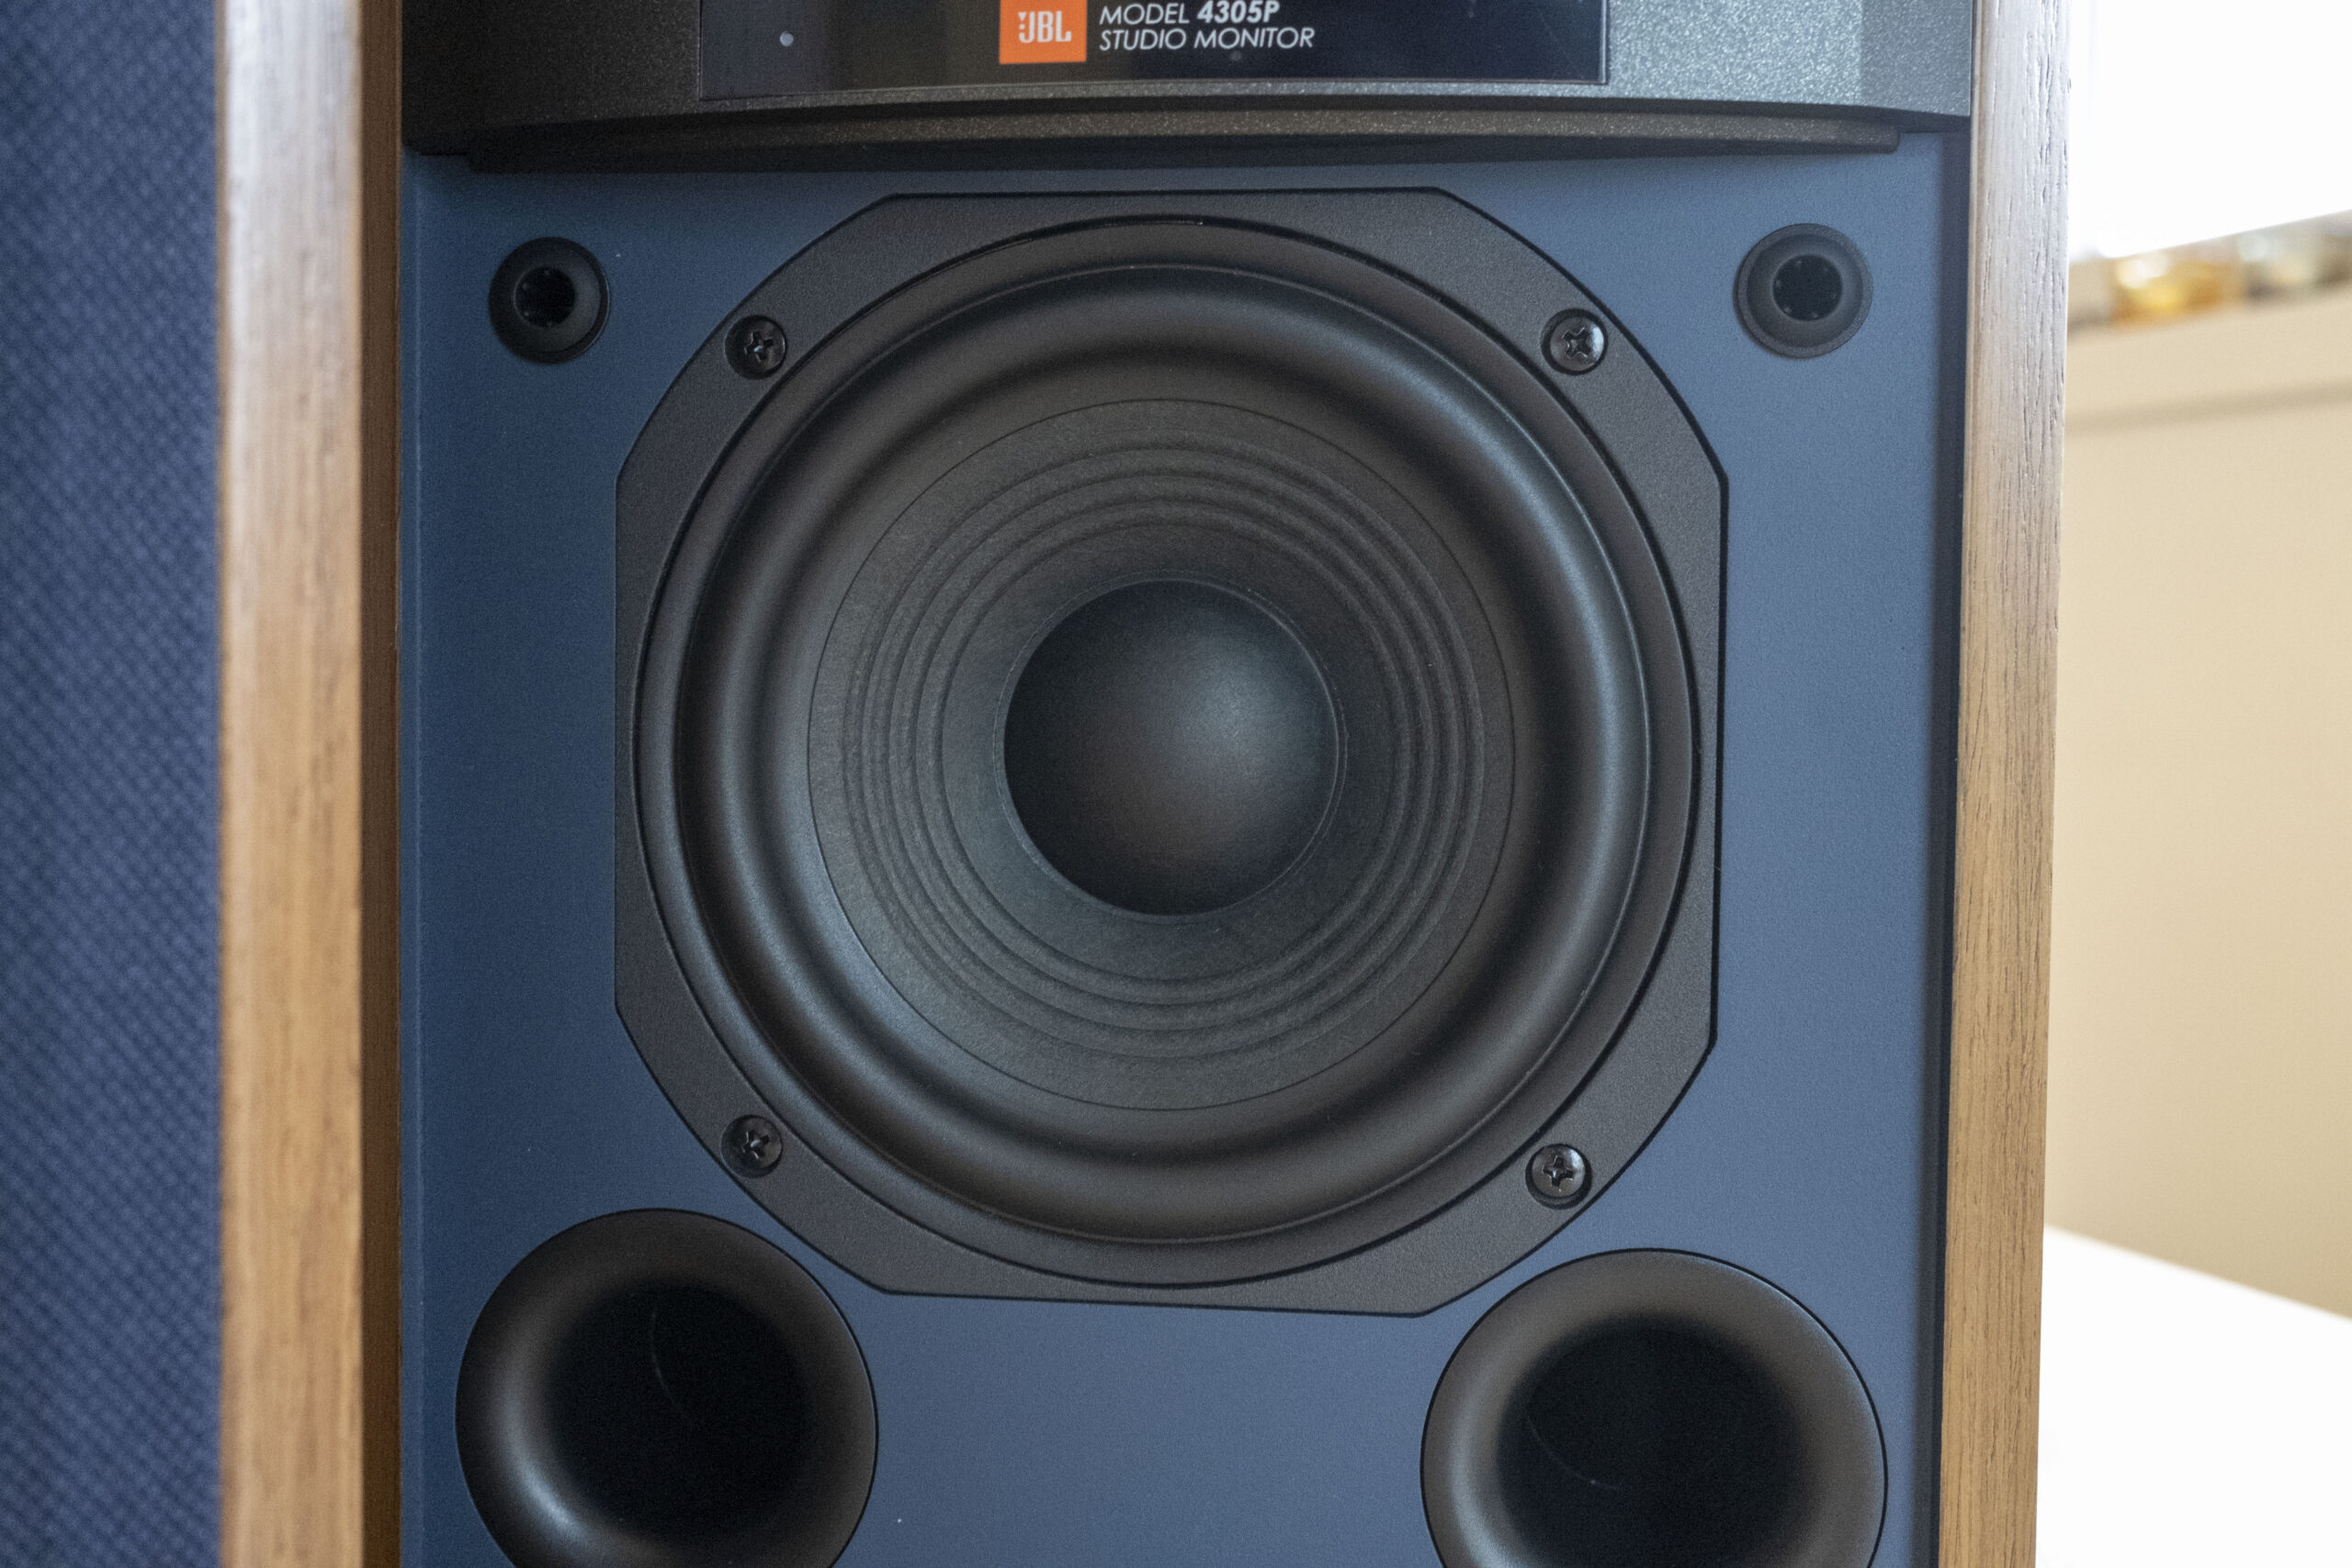 bunker sector onderwijzen Review: JBL 4305P Studio Monitor | The Perfect All-round Speaker